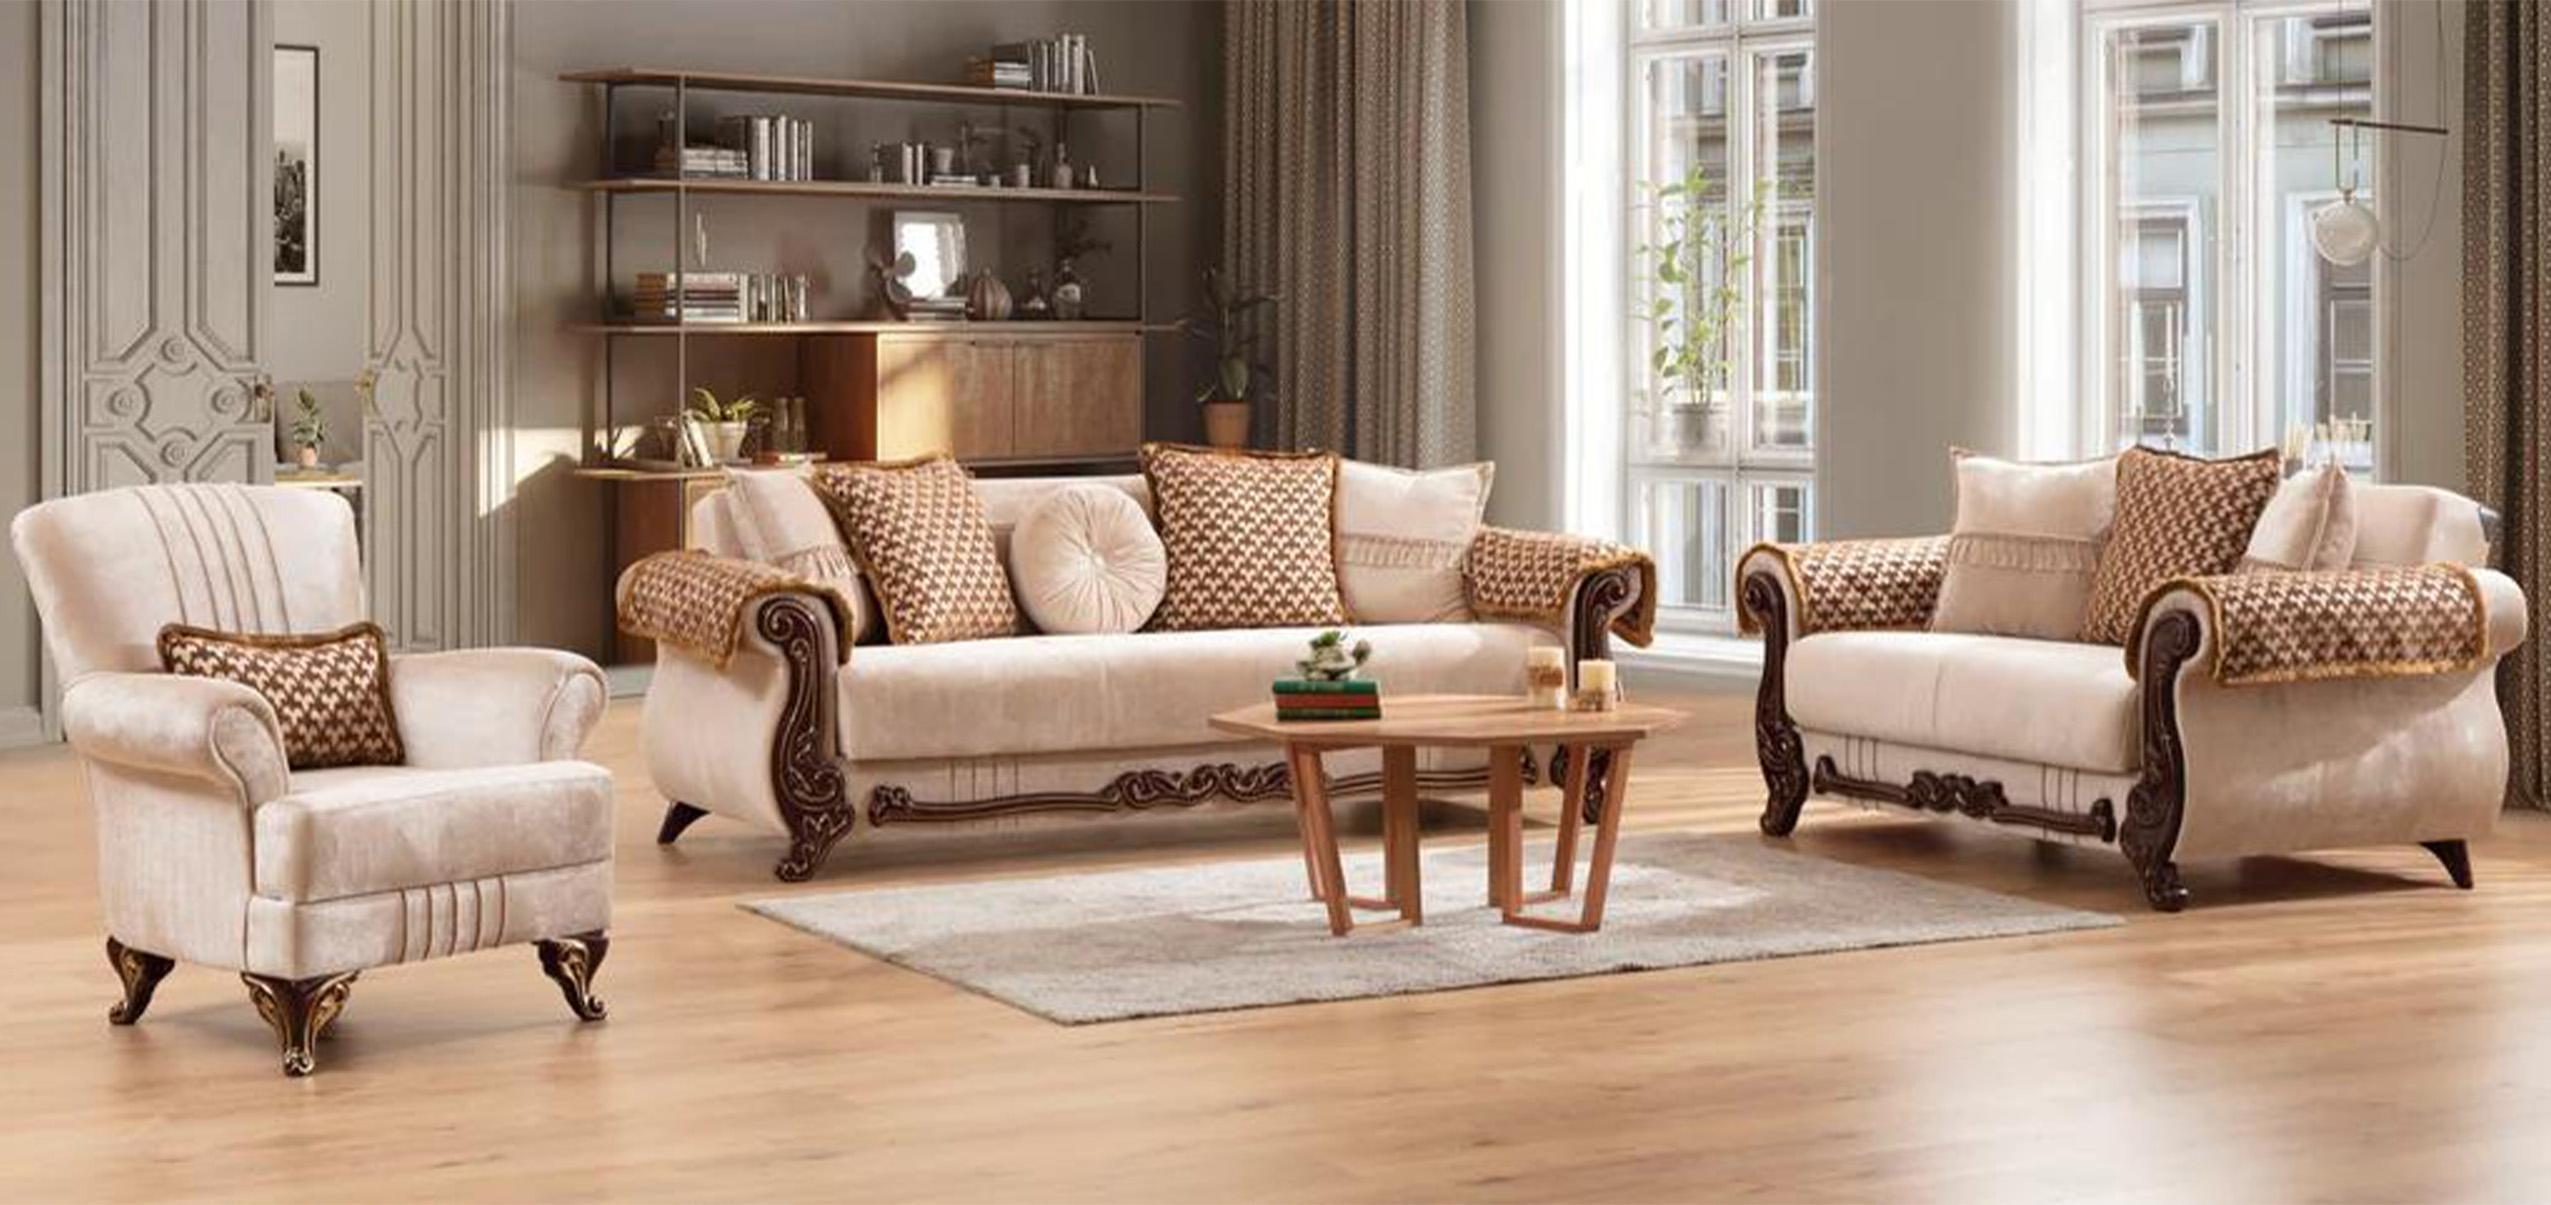 Classic, Traditional Sofa CARMEN 698781166390 in Beige Chenille